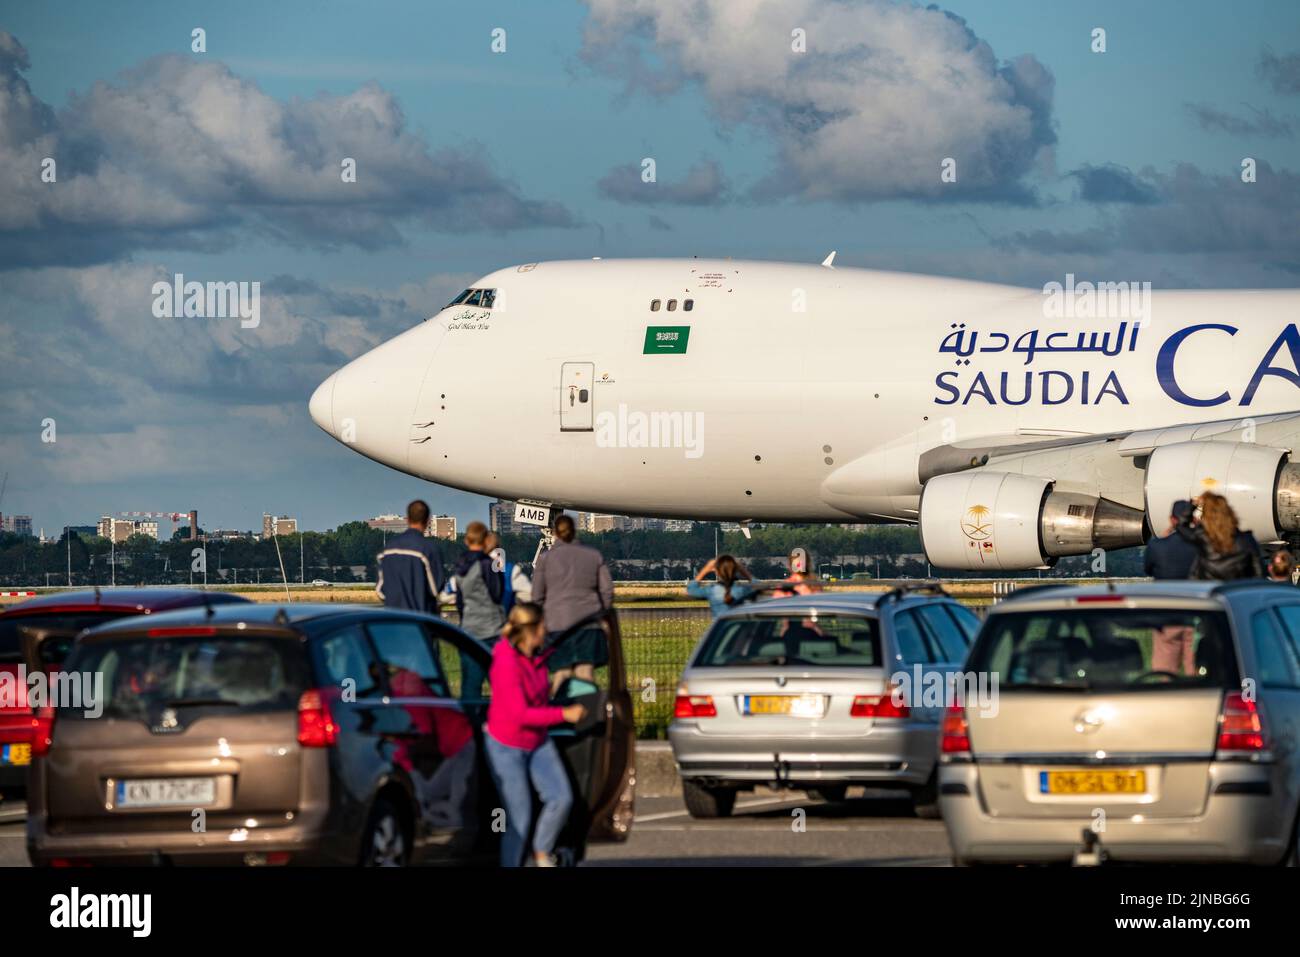 Amsterdam Shiphol Airport, Polderbaan, una de las 6 pistas, spotter spot, ver los aviones de cerca, TF-AMB, Saudi Arabian Airlines Boeing 747-400F Foto de stock